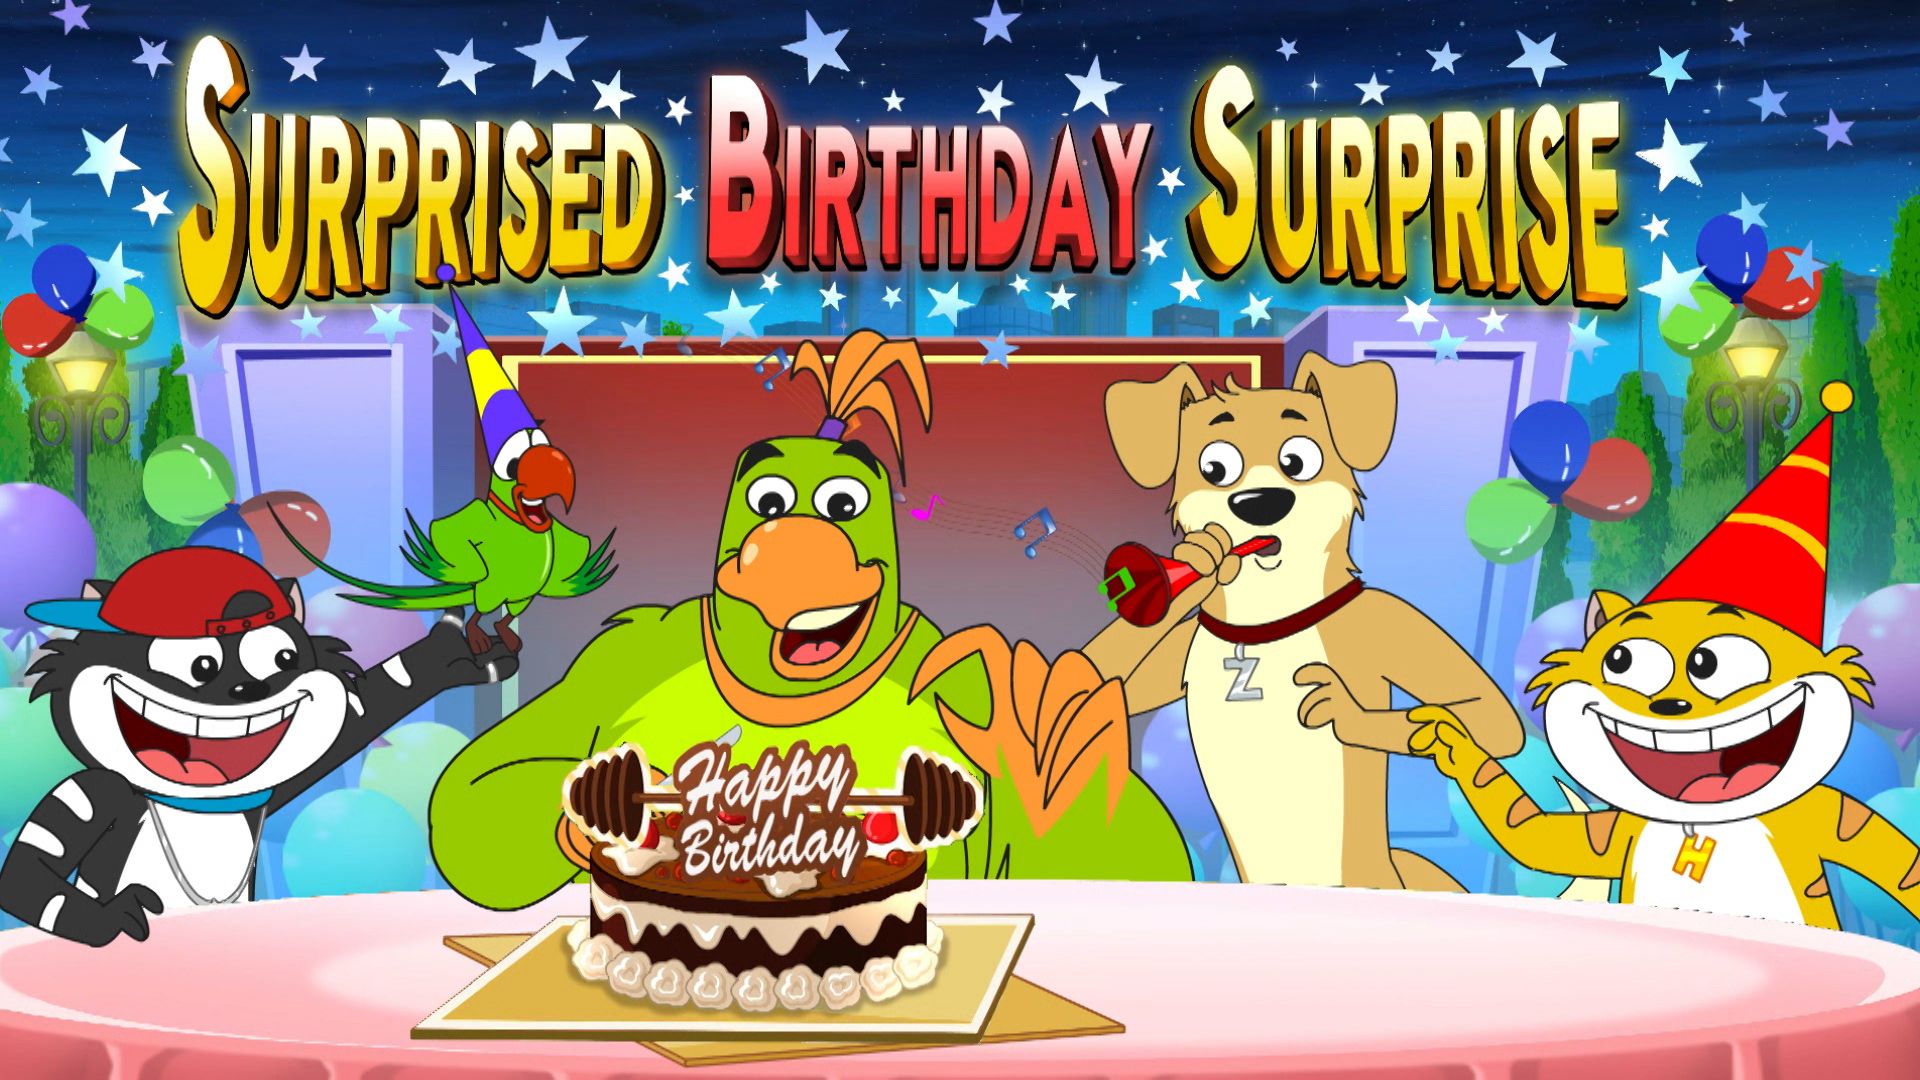 Surprised Birthday Surprise